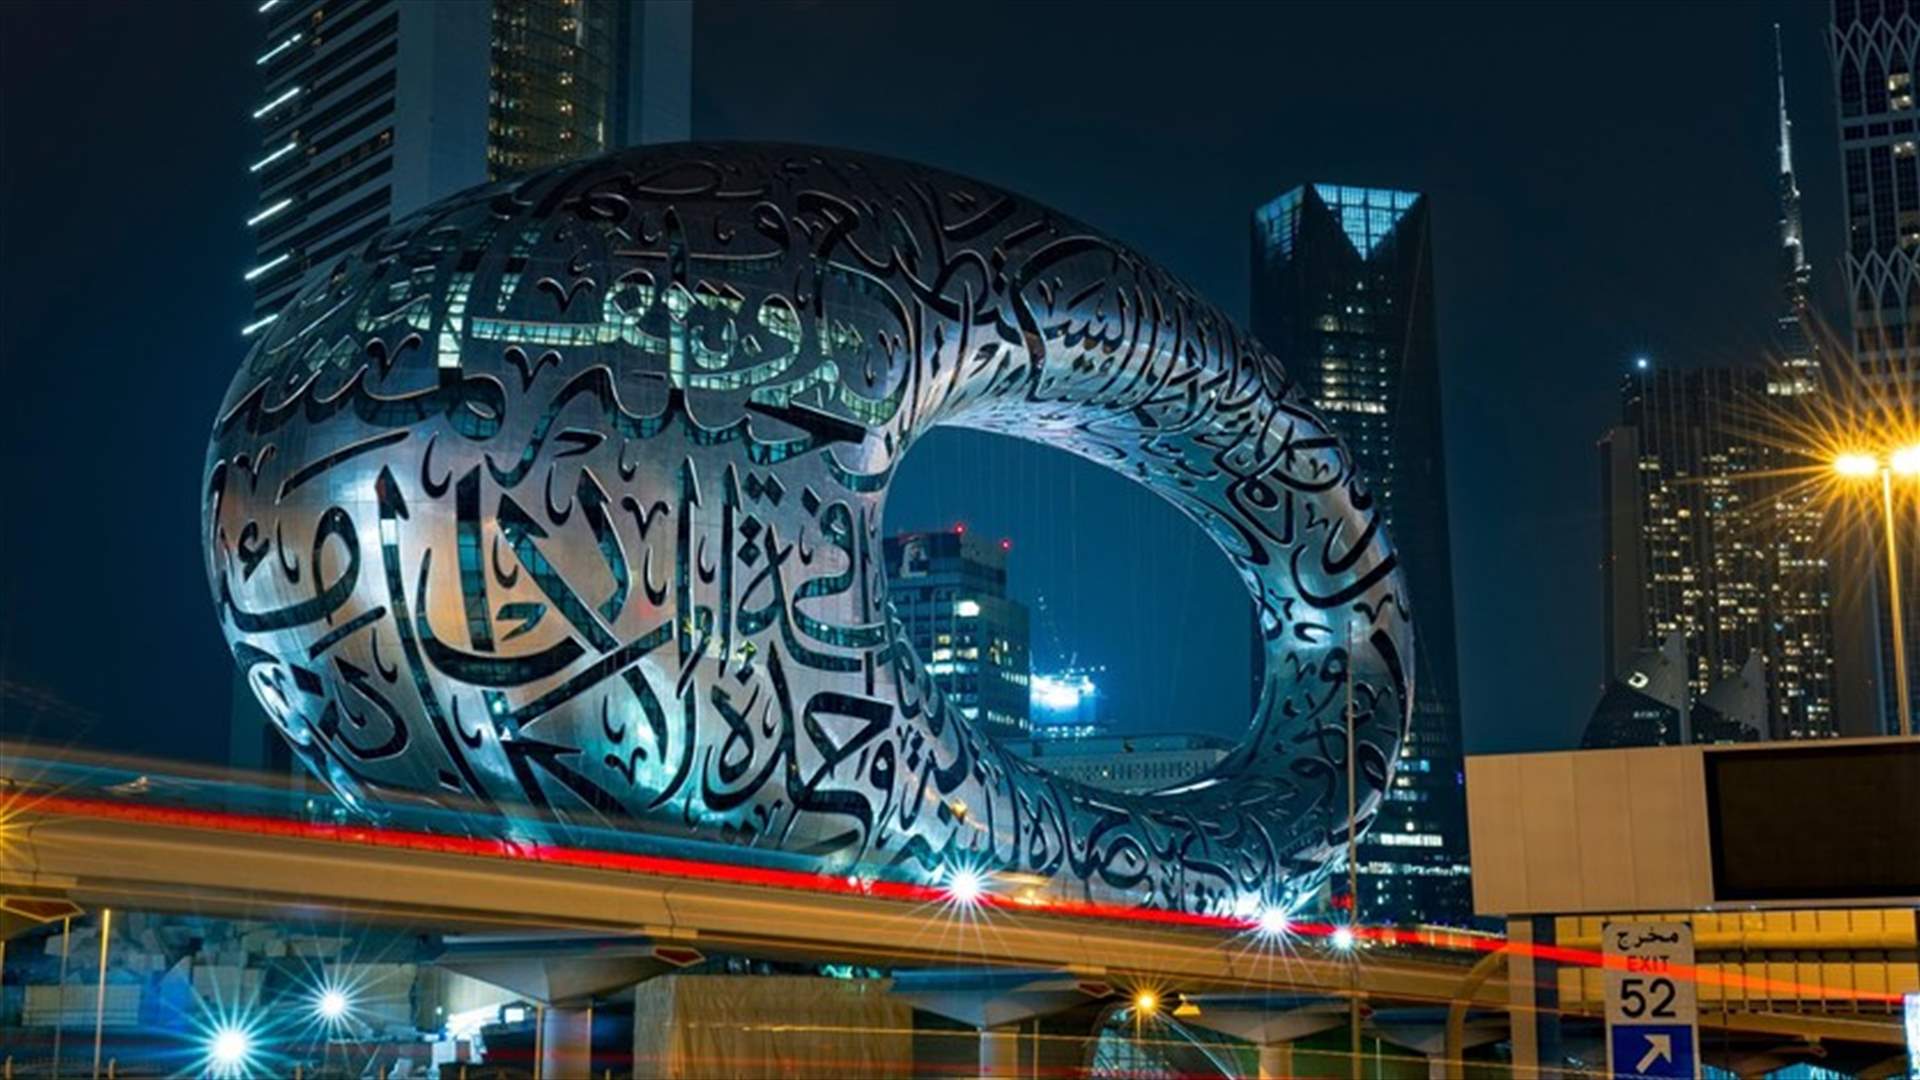 &quot;ناشيونال جيوغرافيك&quot; تختار متحف دبي المستقبل ضمن الأجمل عالمياً